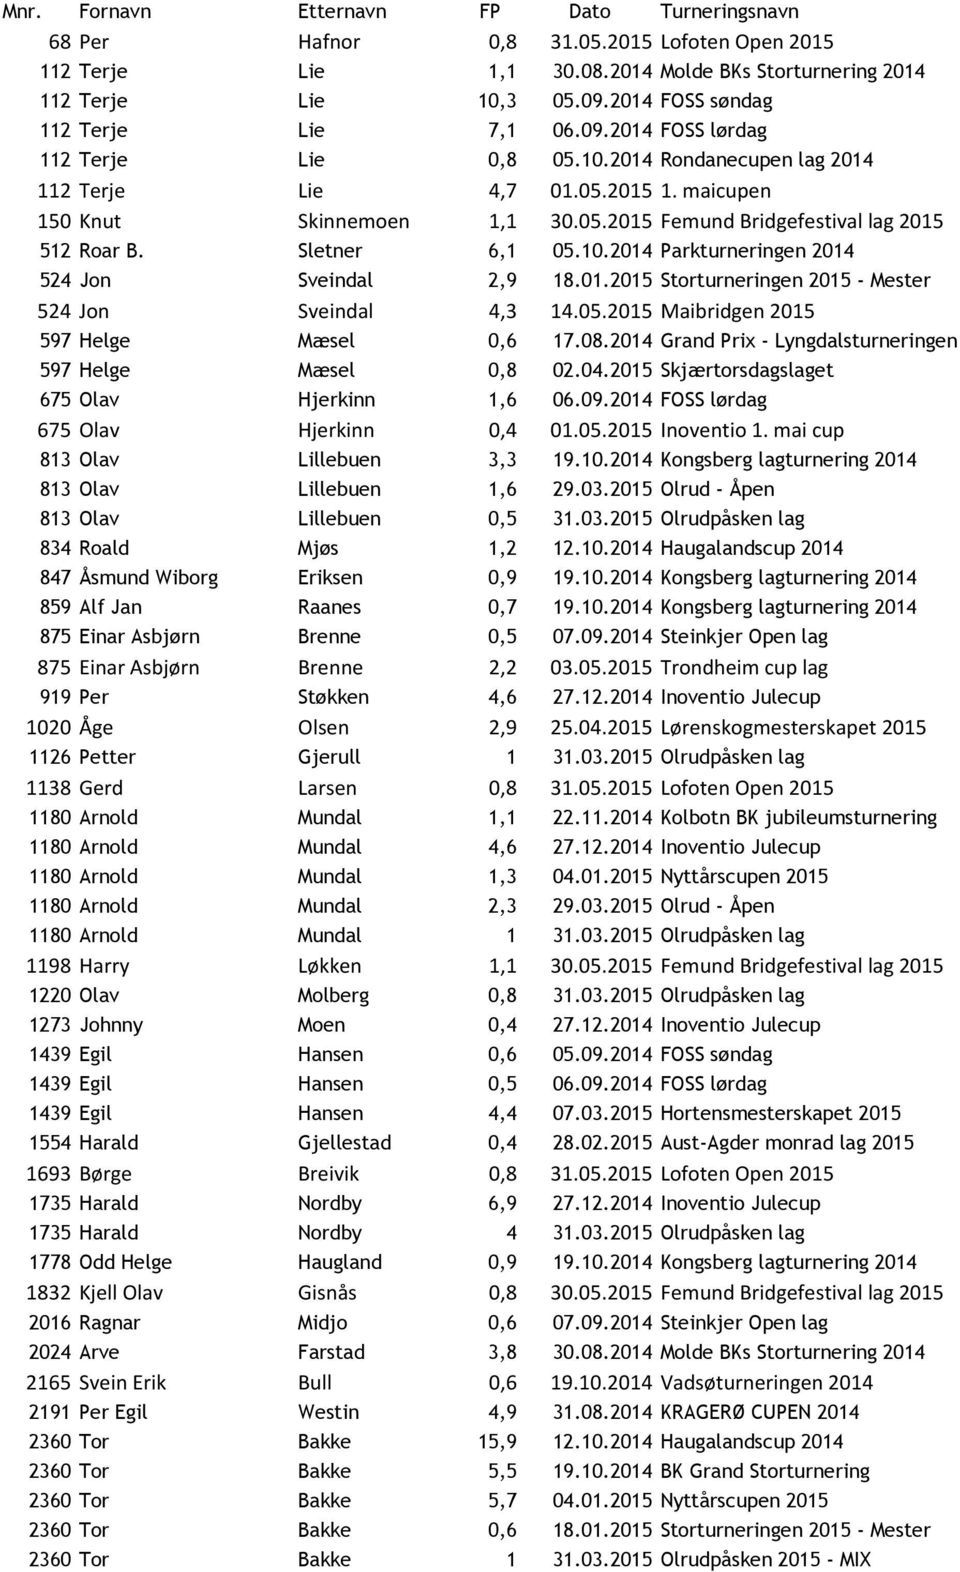 Sletner 6,1 05.10.2014 Parkturneringen 2014 524 Jon Sveindal 2,9 18.01.2015 Storturneringen 2015 - Mester 524 Jon Sveindal 4,3 14.05.2015 Maibridgen 2015 597 Helge Mæsel 0,6 17.08.